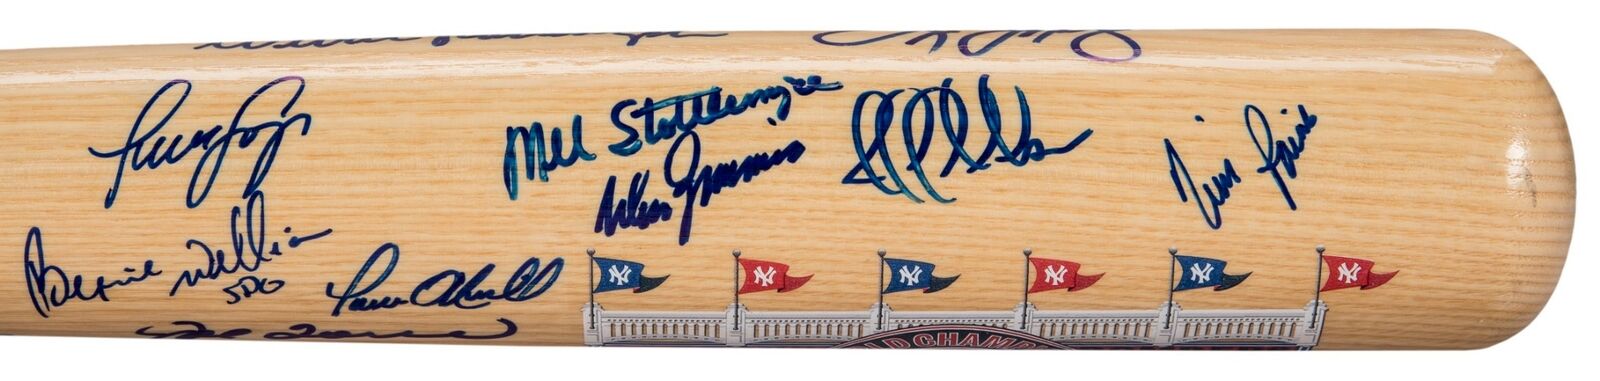 1996 New York Yankees World Series Champs Team Signed Bat JSA COA LE #15/75